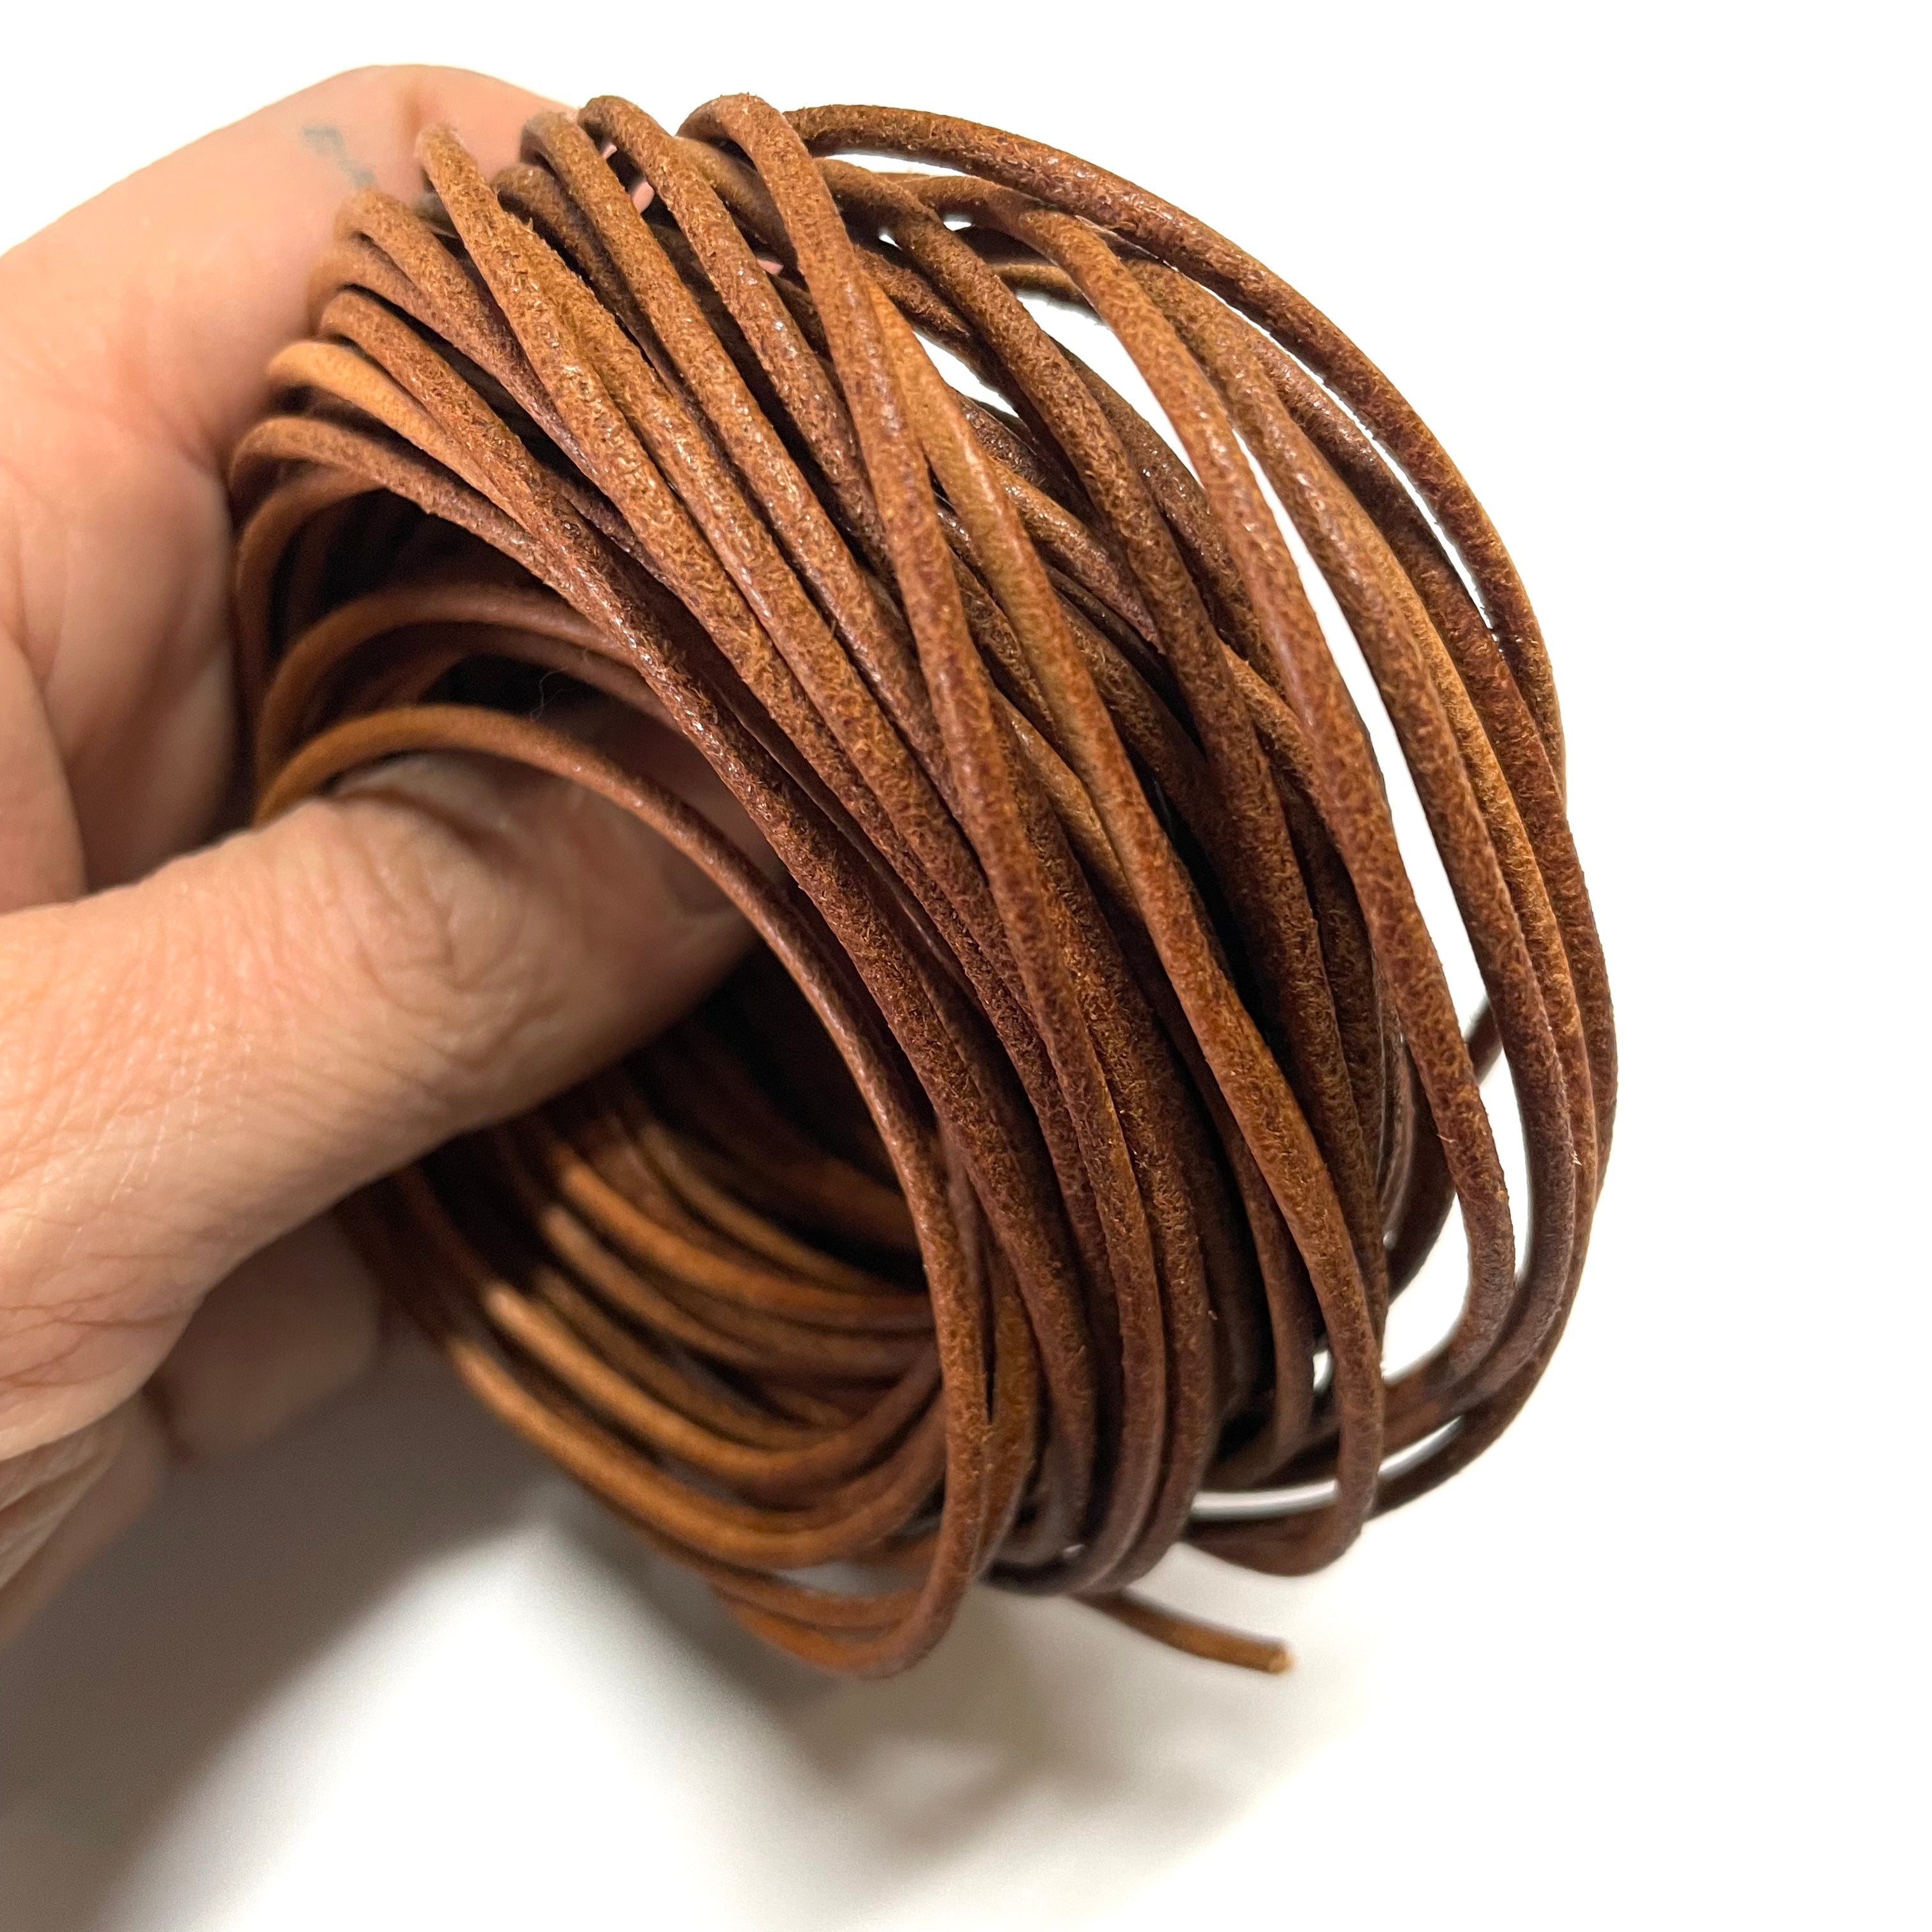 Natural Genuine Leather Cord per 10mtrs - Natural Tan Brown 1.5mm